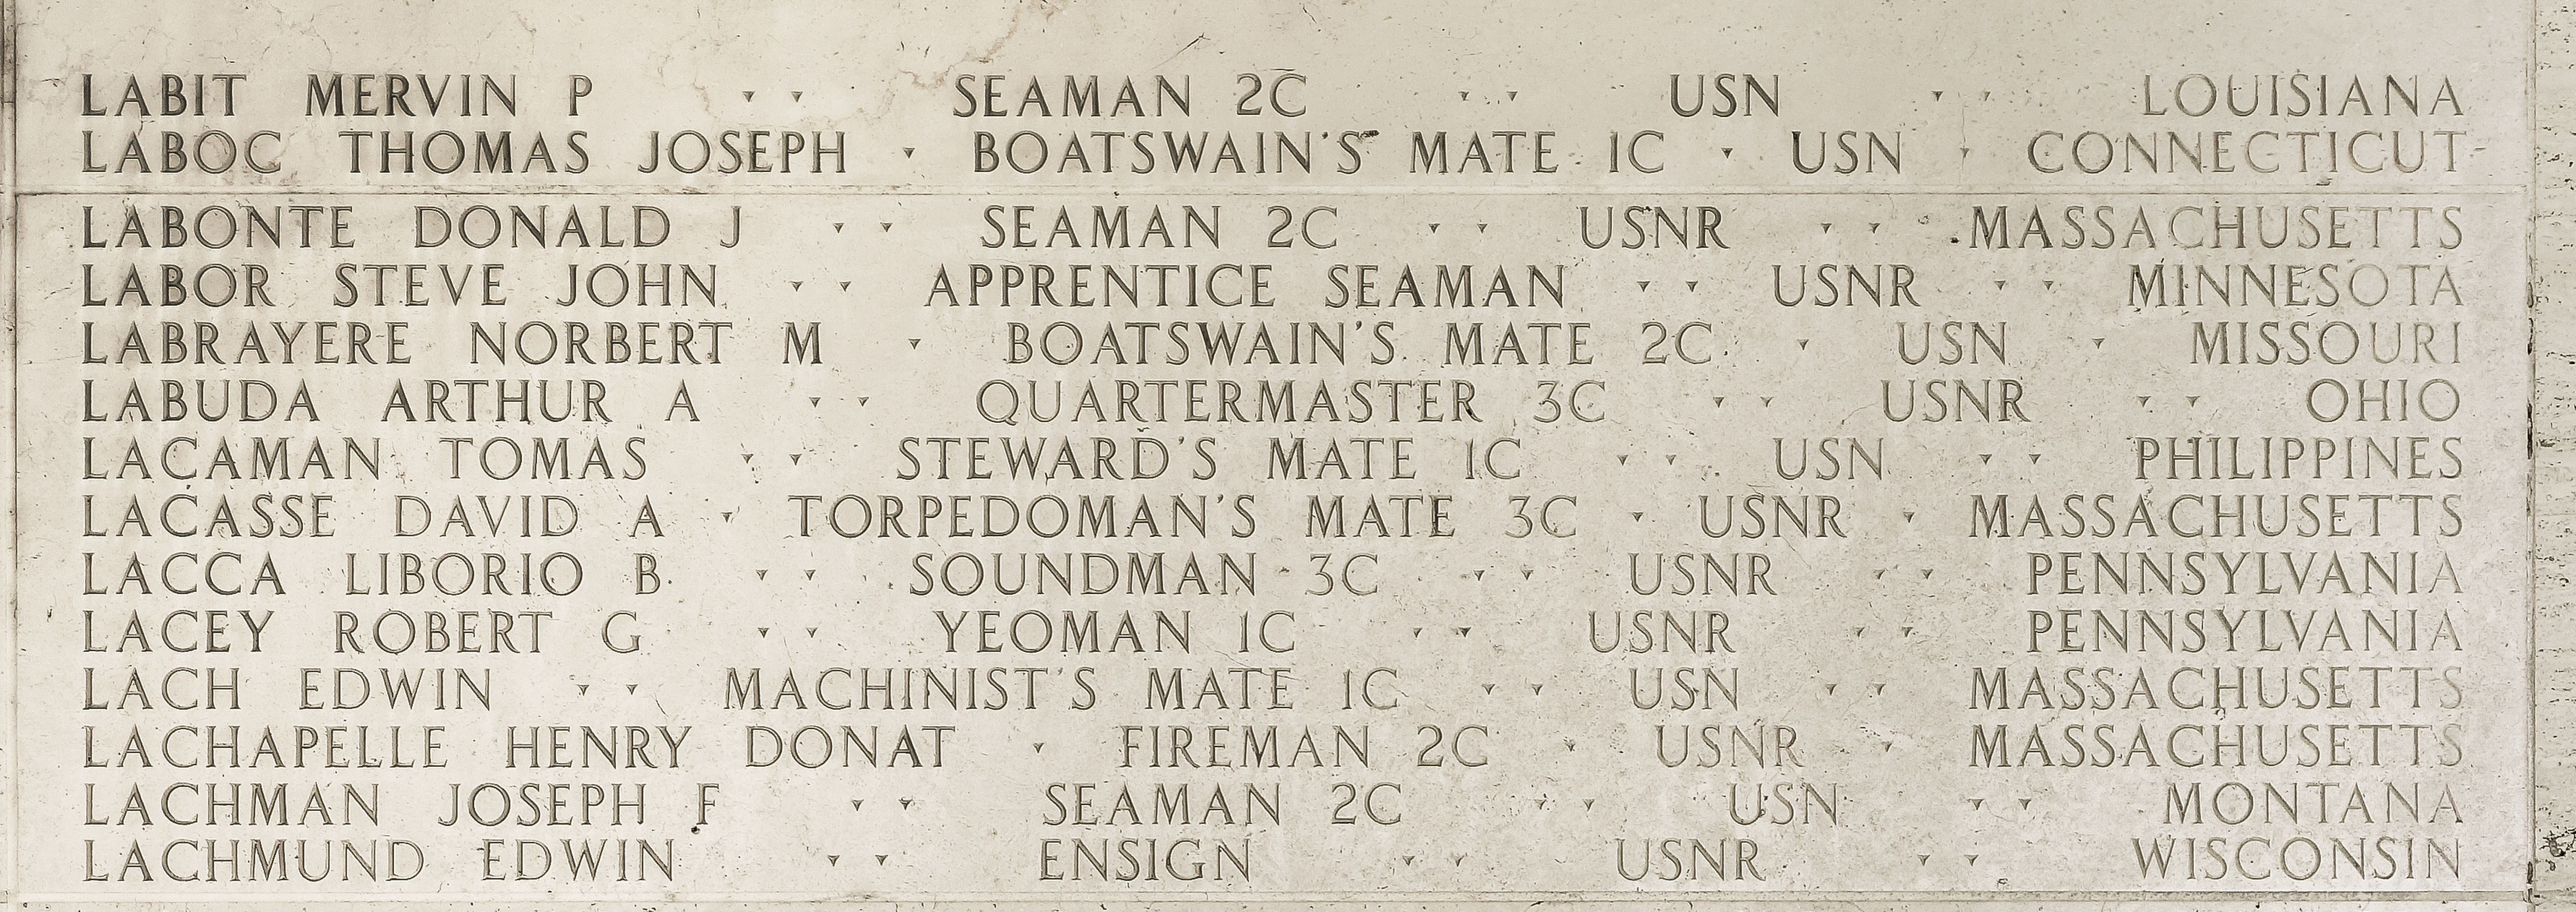 Robert G. Lacey, Yeoman First Class